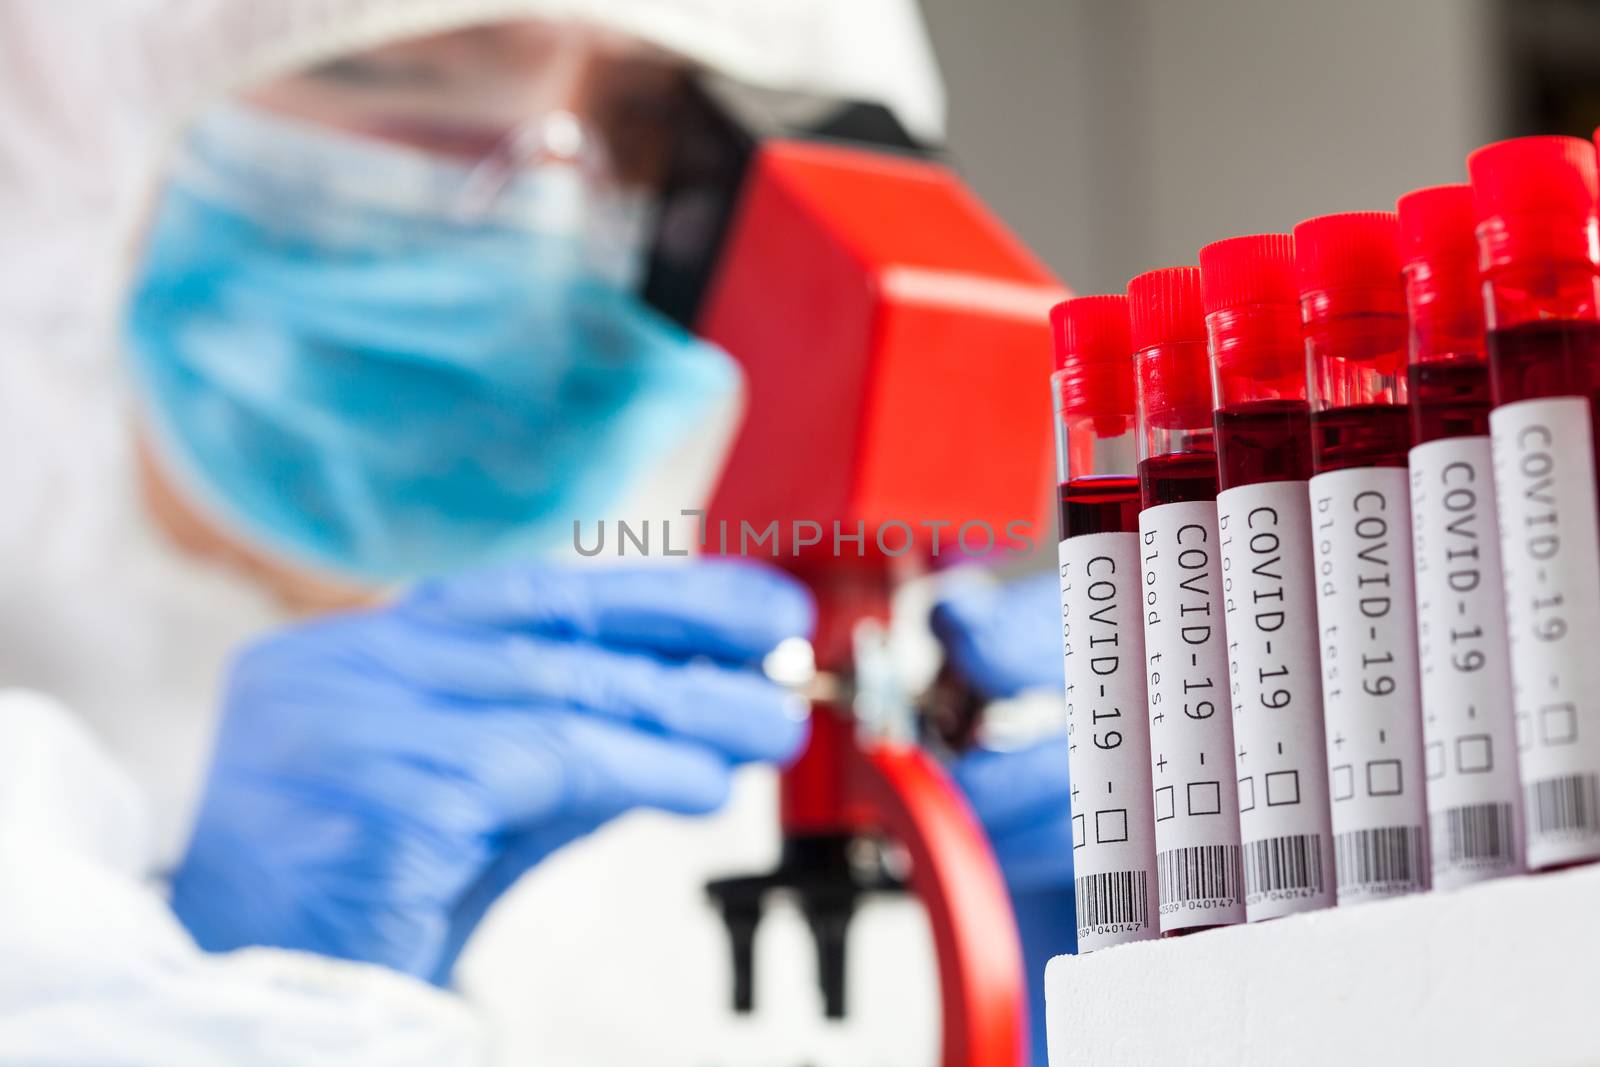 Medical technologist or lab scientist microscope examining Coronavirus patient test tube blood sample specimen, deadly COVID-19 respiratory virus disease global worldwide pandemic outbreak crisis